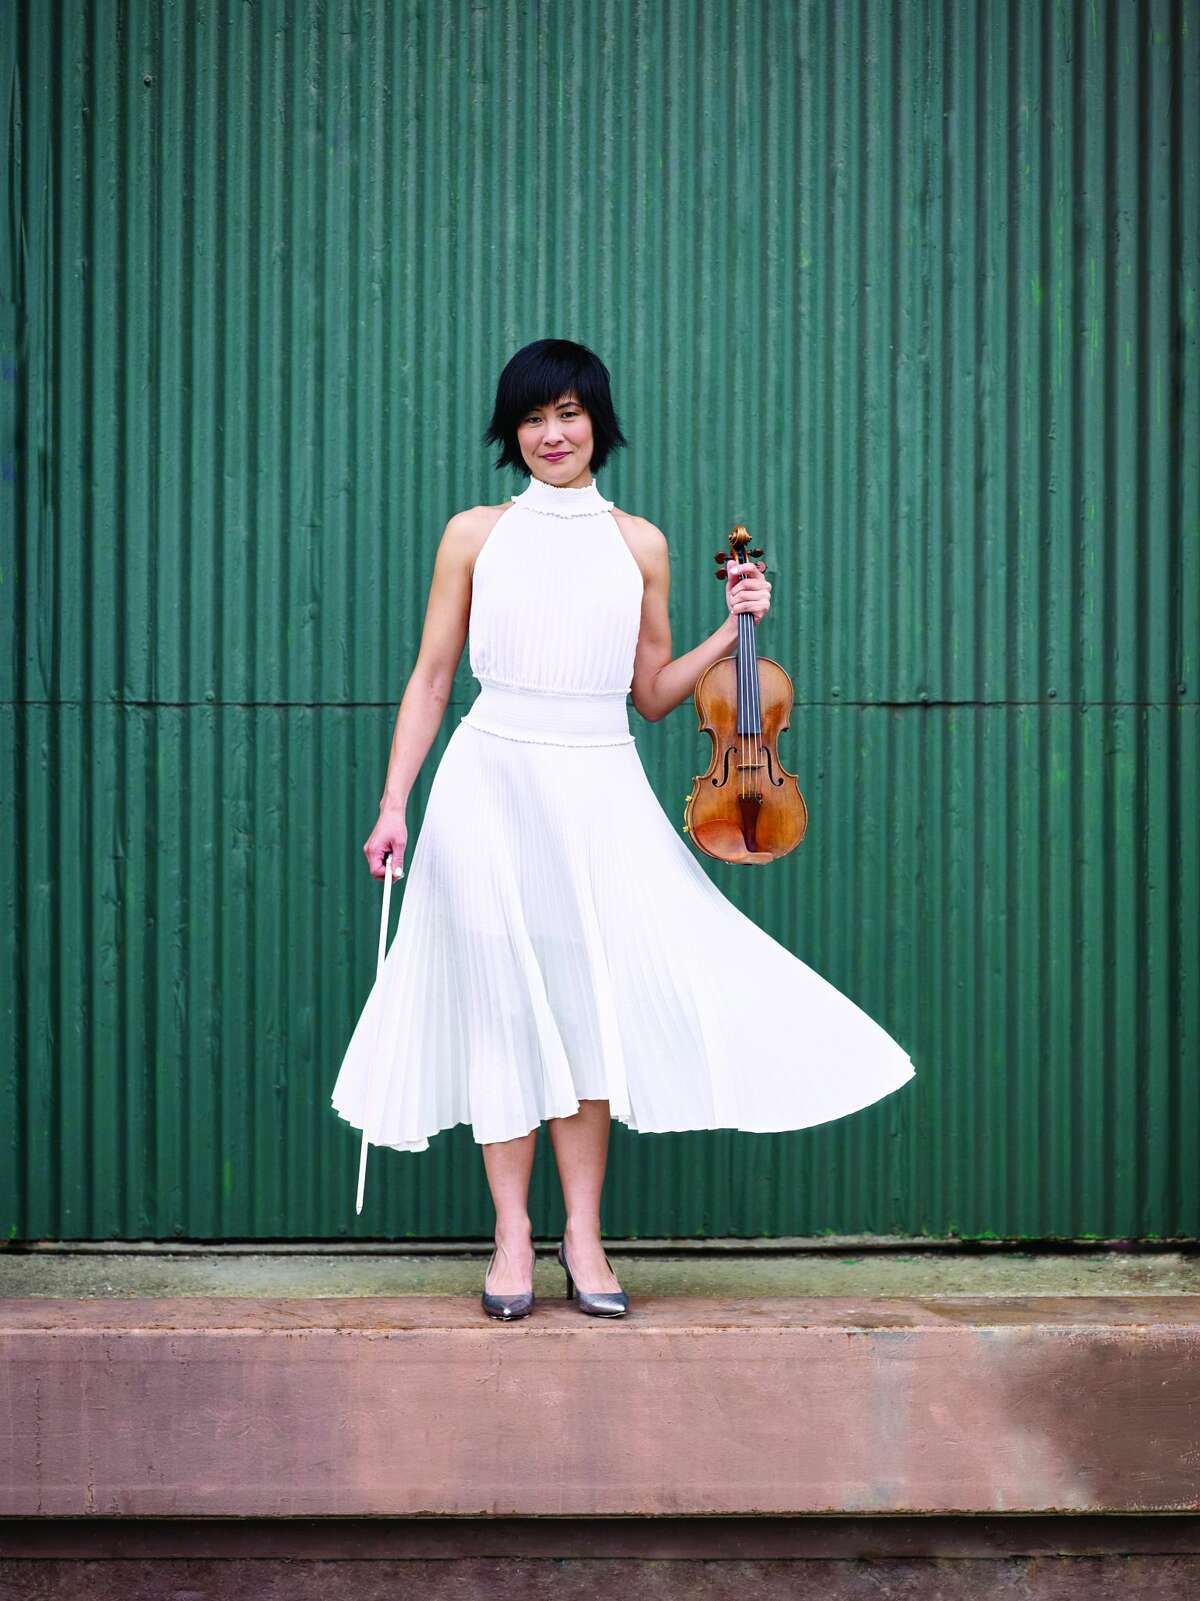 Violinist Jennifer Koh (photo: Jurgen Frank)